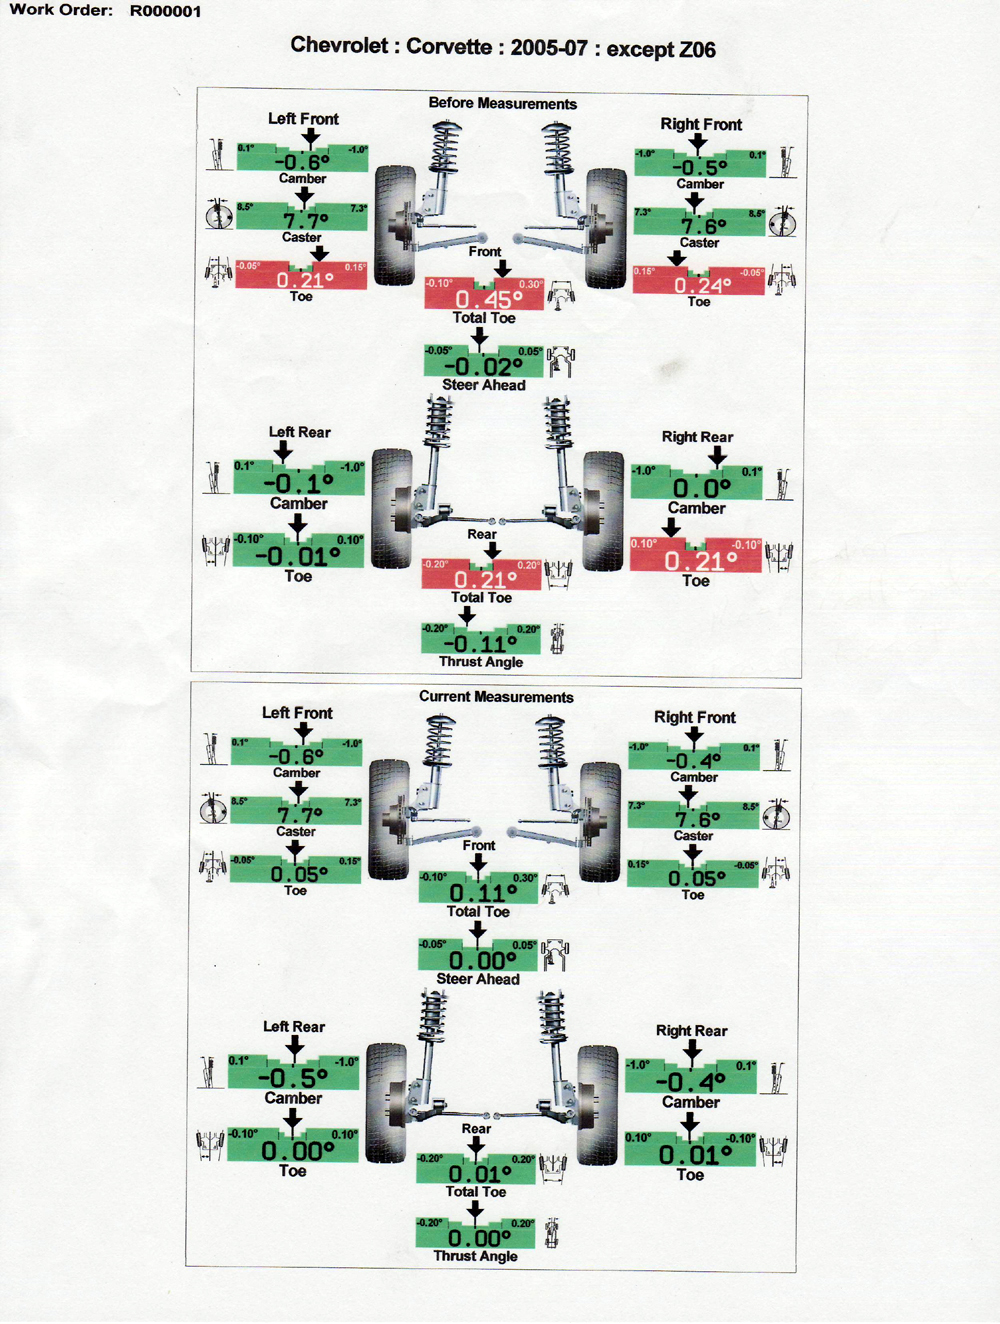 Wheel Alignment Chart